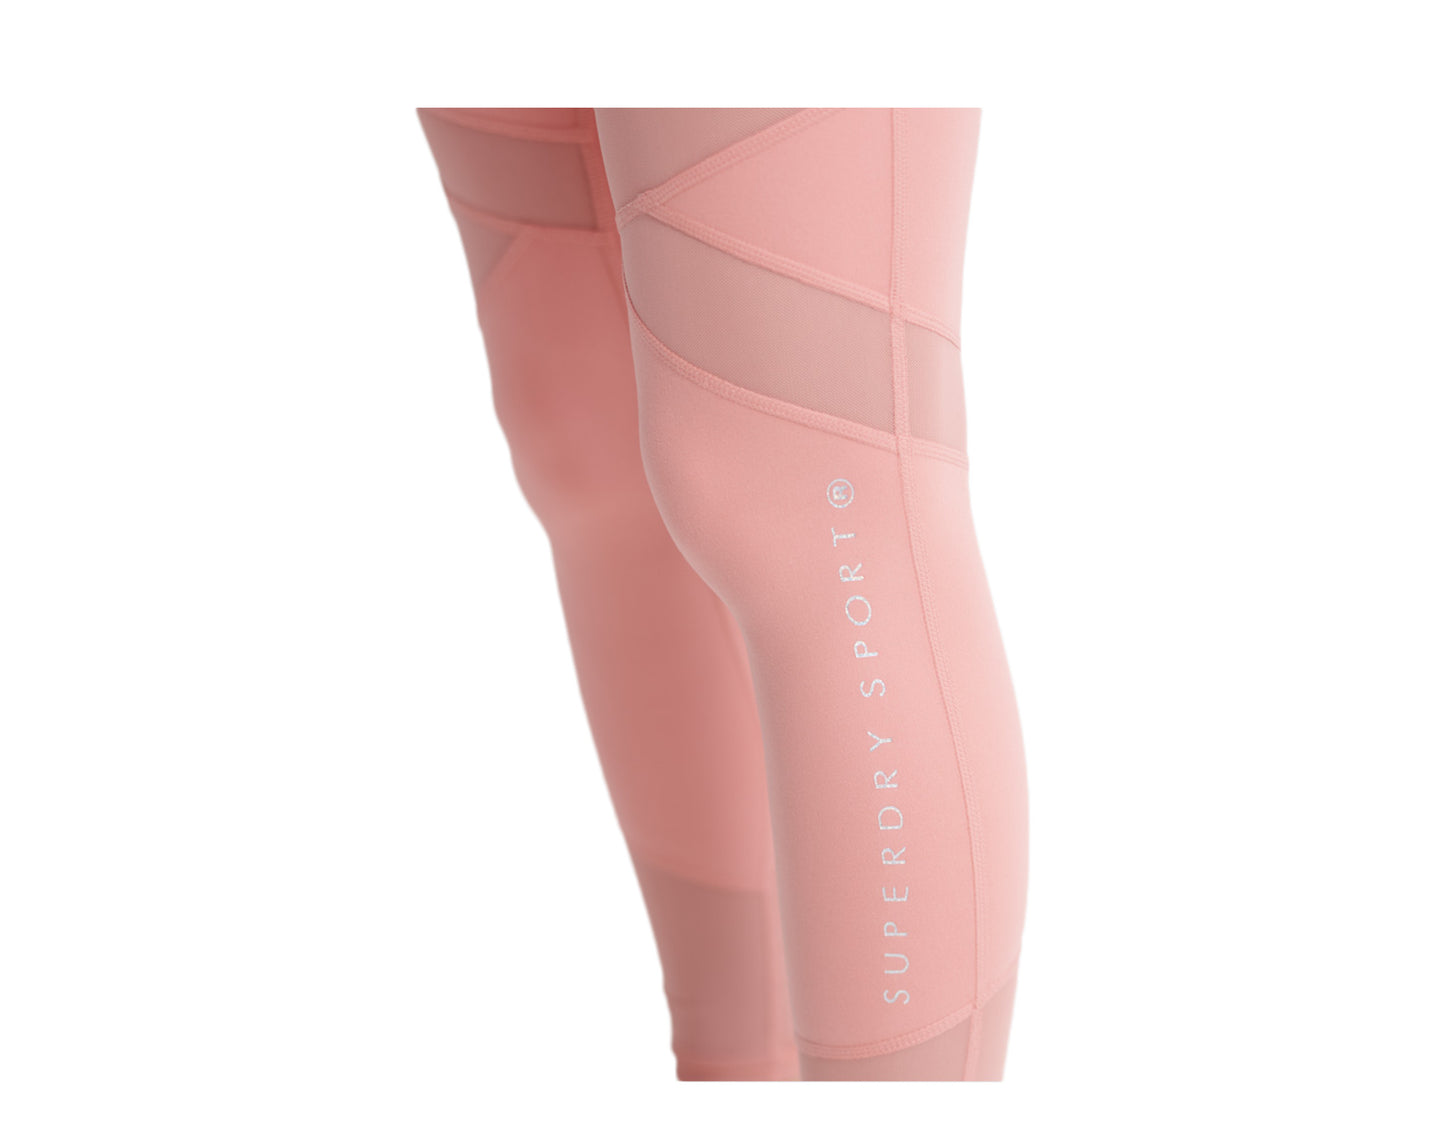 Superdry Studio Rosette Pink Women's Leggings WS300030A-ROSE